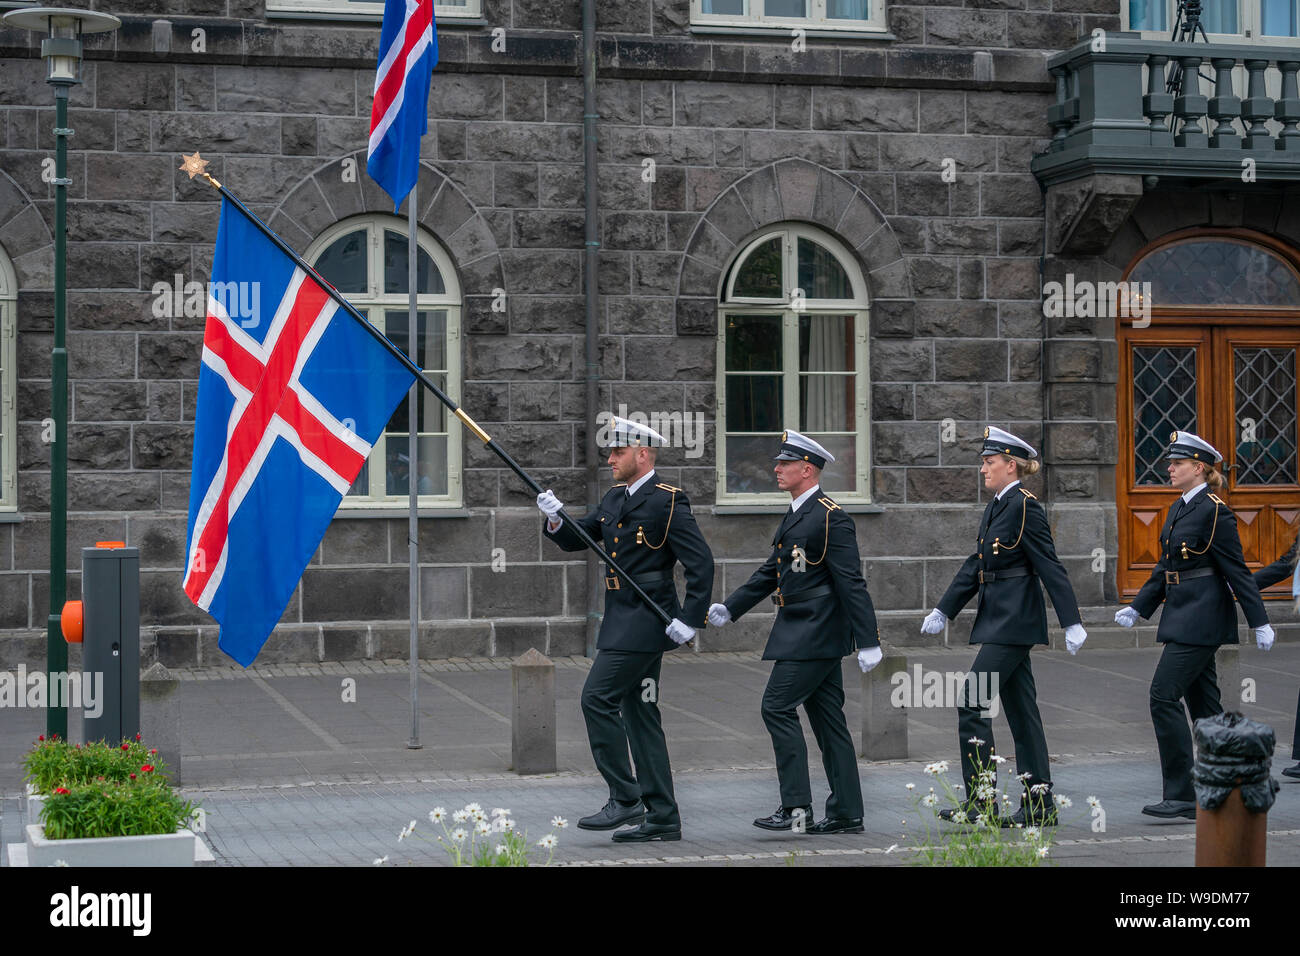 Icelandic police dressed in formal uniforms, during Iceland's Independence Day, Reykjavik, Iceland Stock Photo